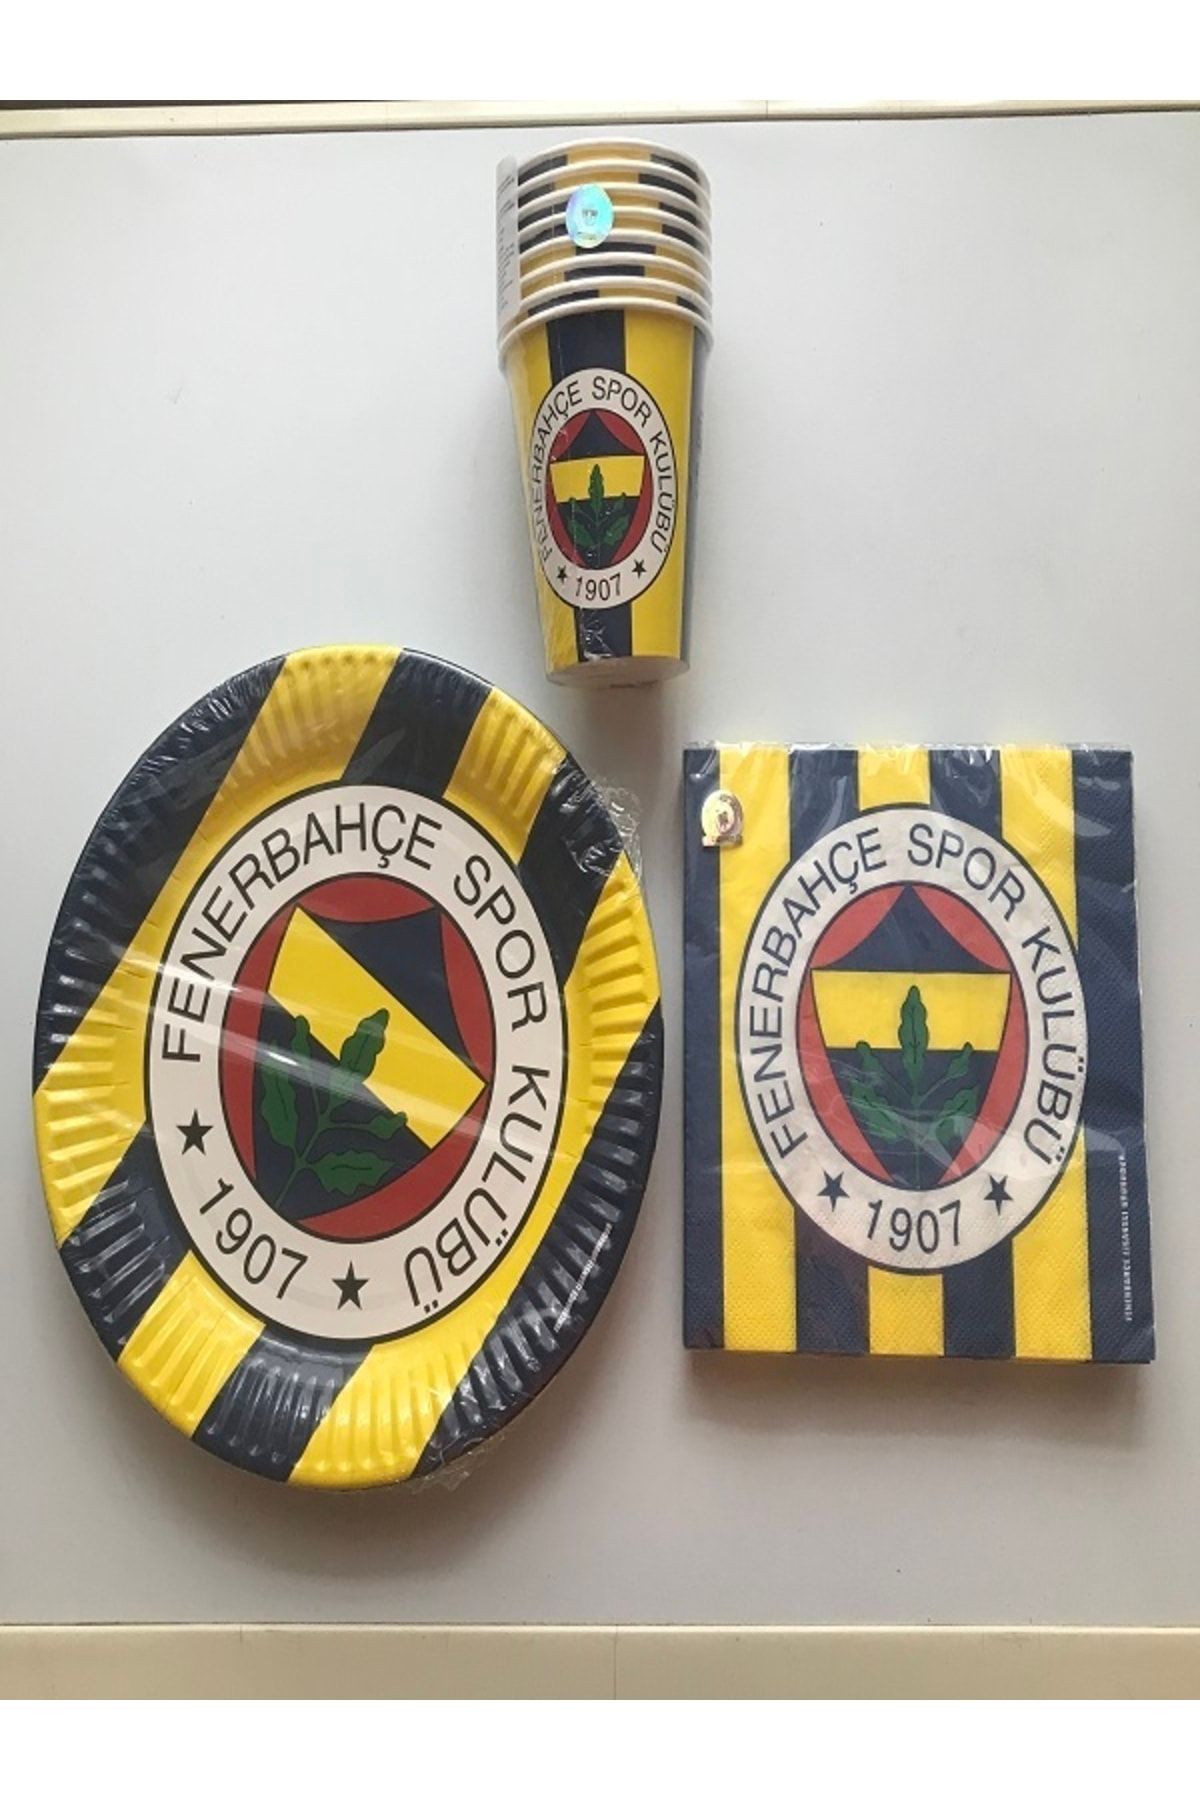 Fenerbahçe Tabak (8 adet)